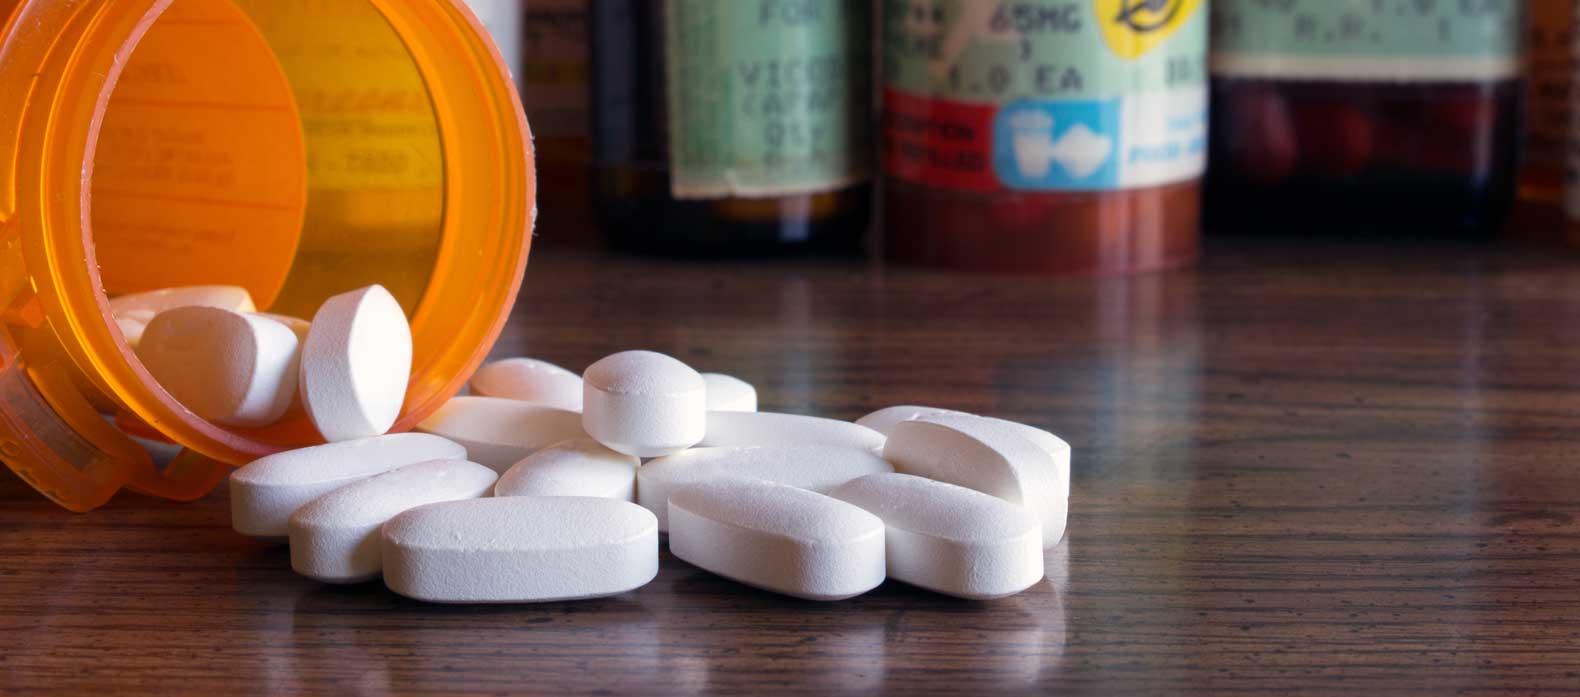 Long-term Exposure to Opioid Drugs